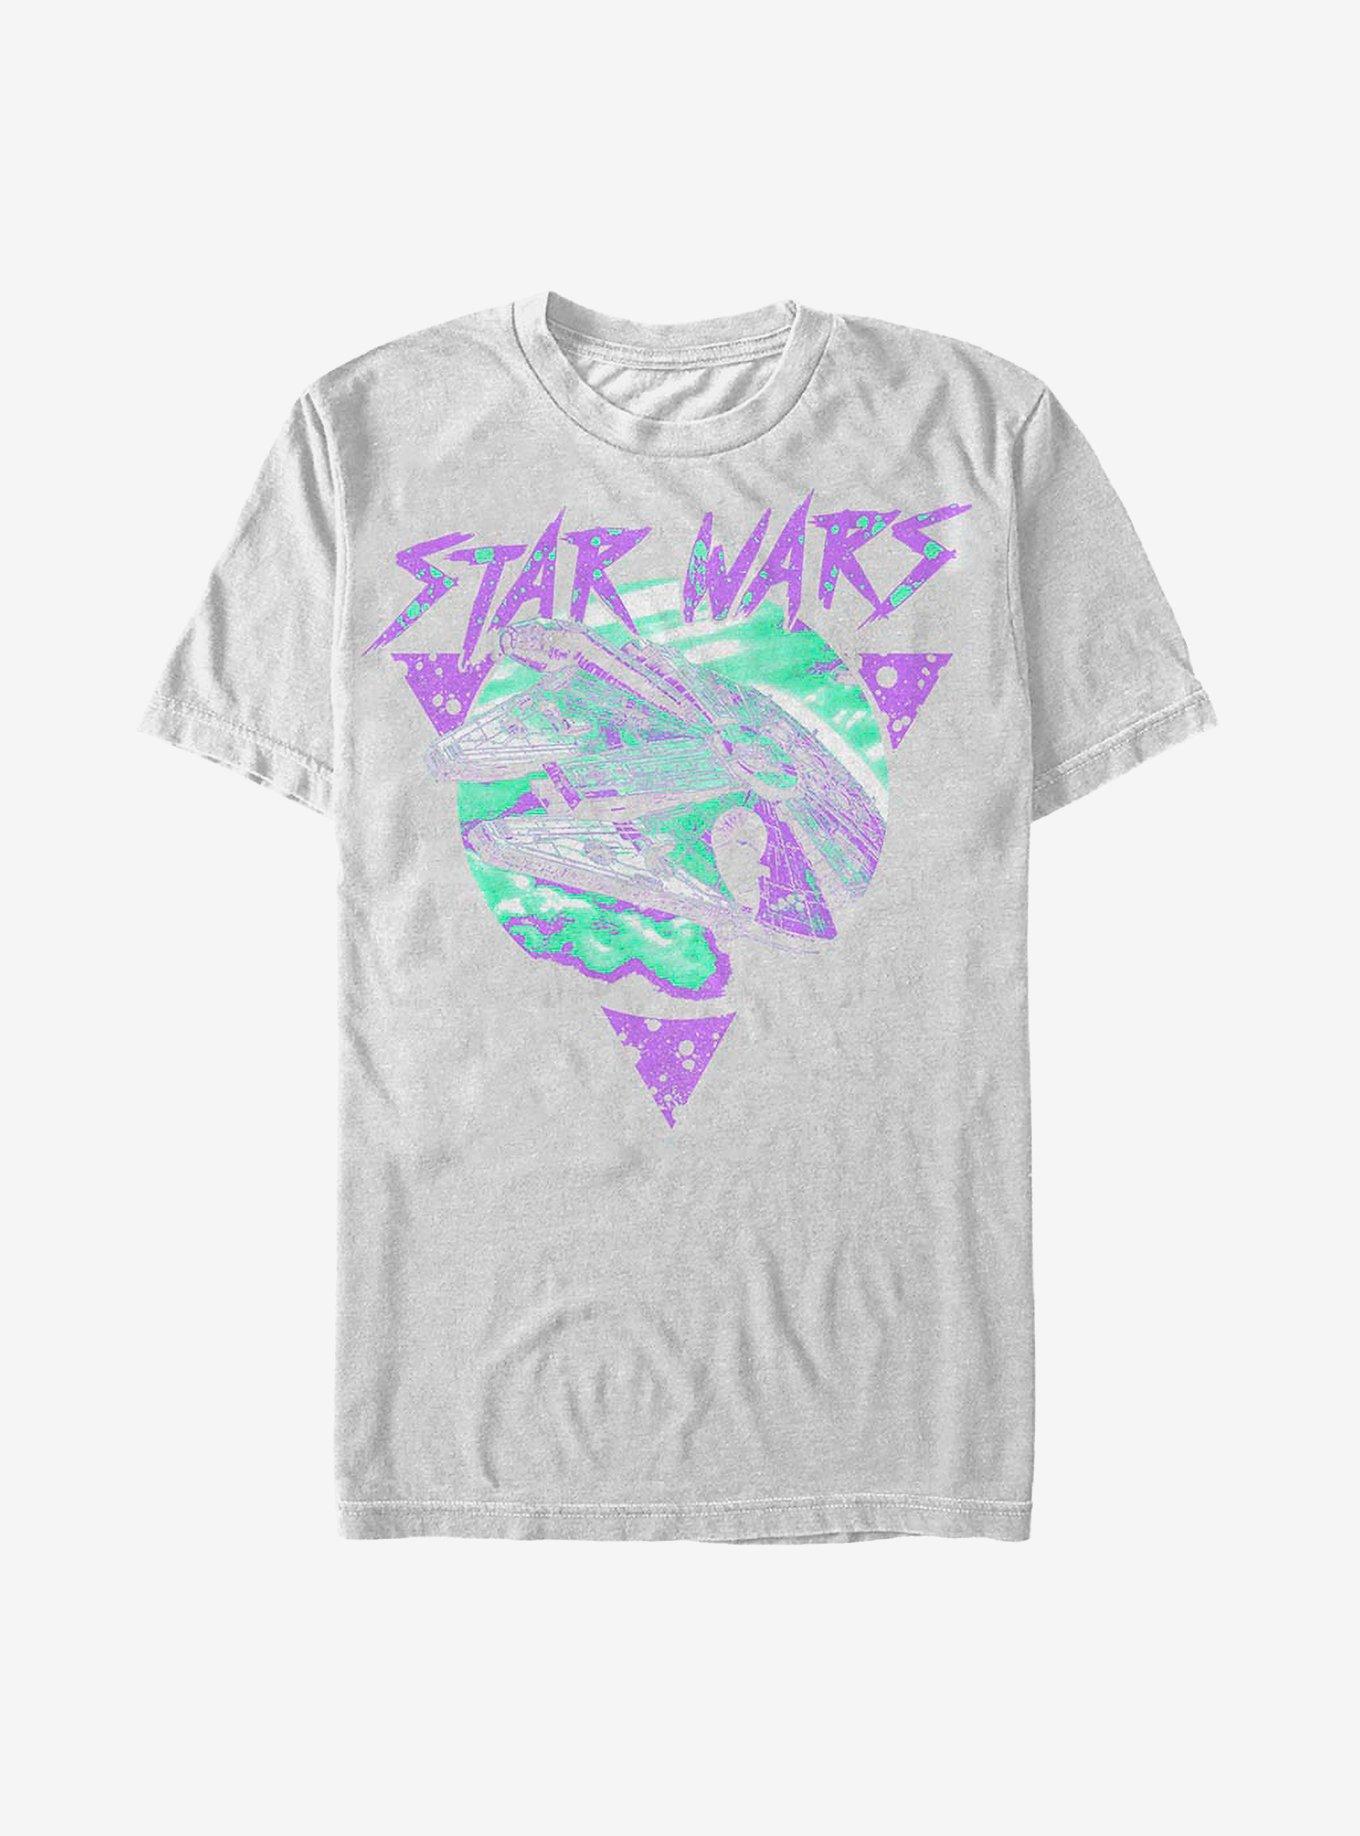 Star Wars New Wave Falcon T-Shirt, BLACK, hi-res